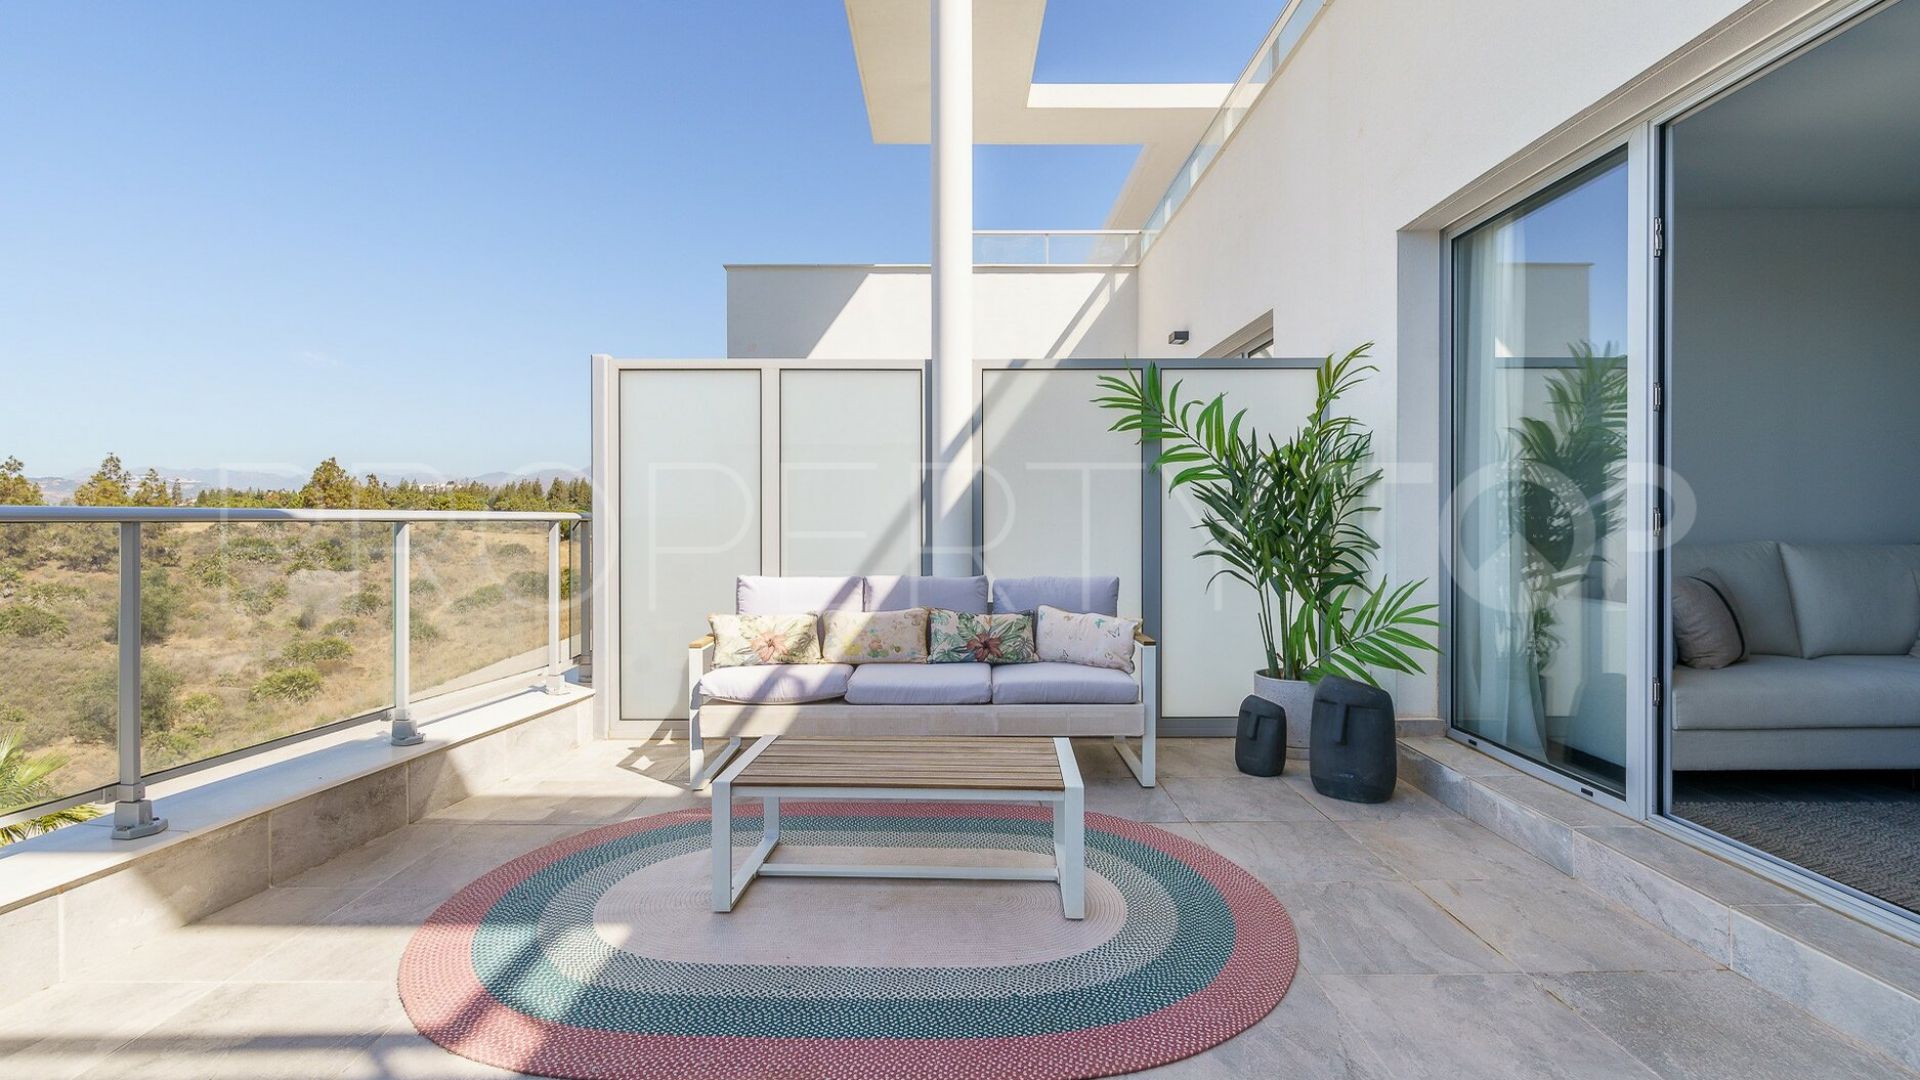 4 bedrooms penthouse in Cala de Mijas for sale